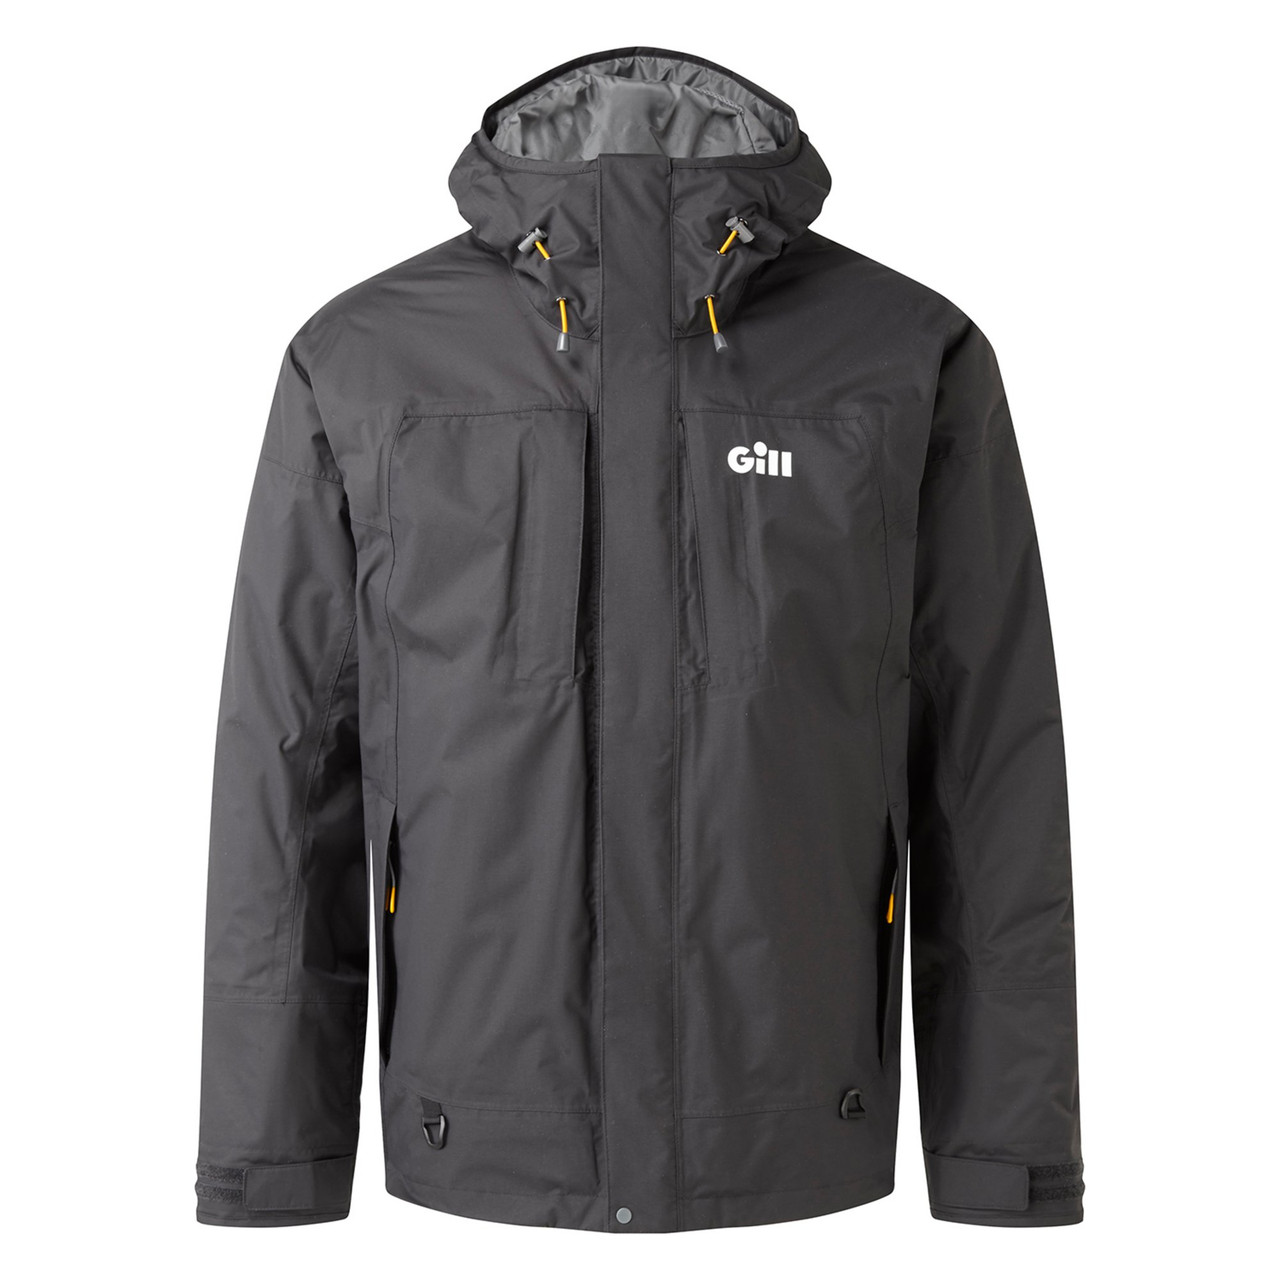 Jackets & Rainwear – The Northern Angler Fly Shop